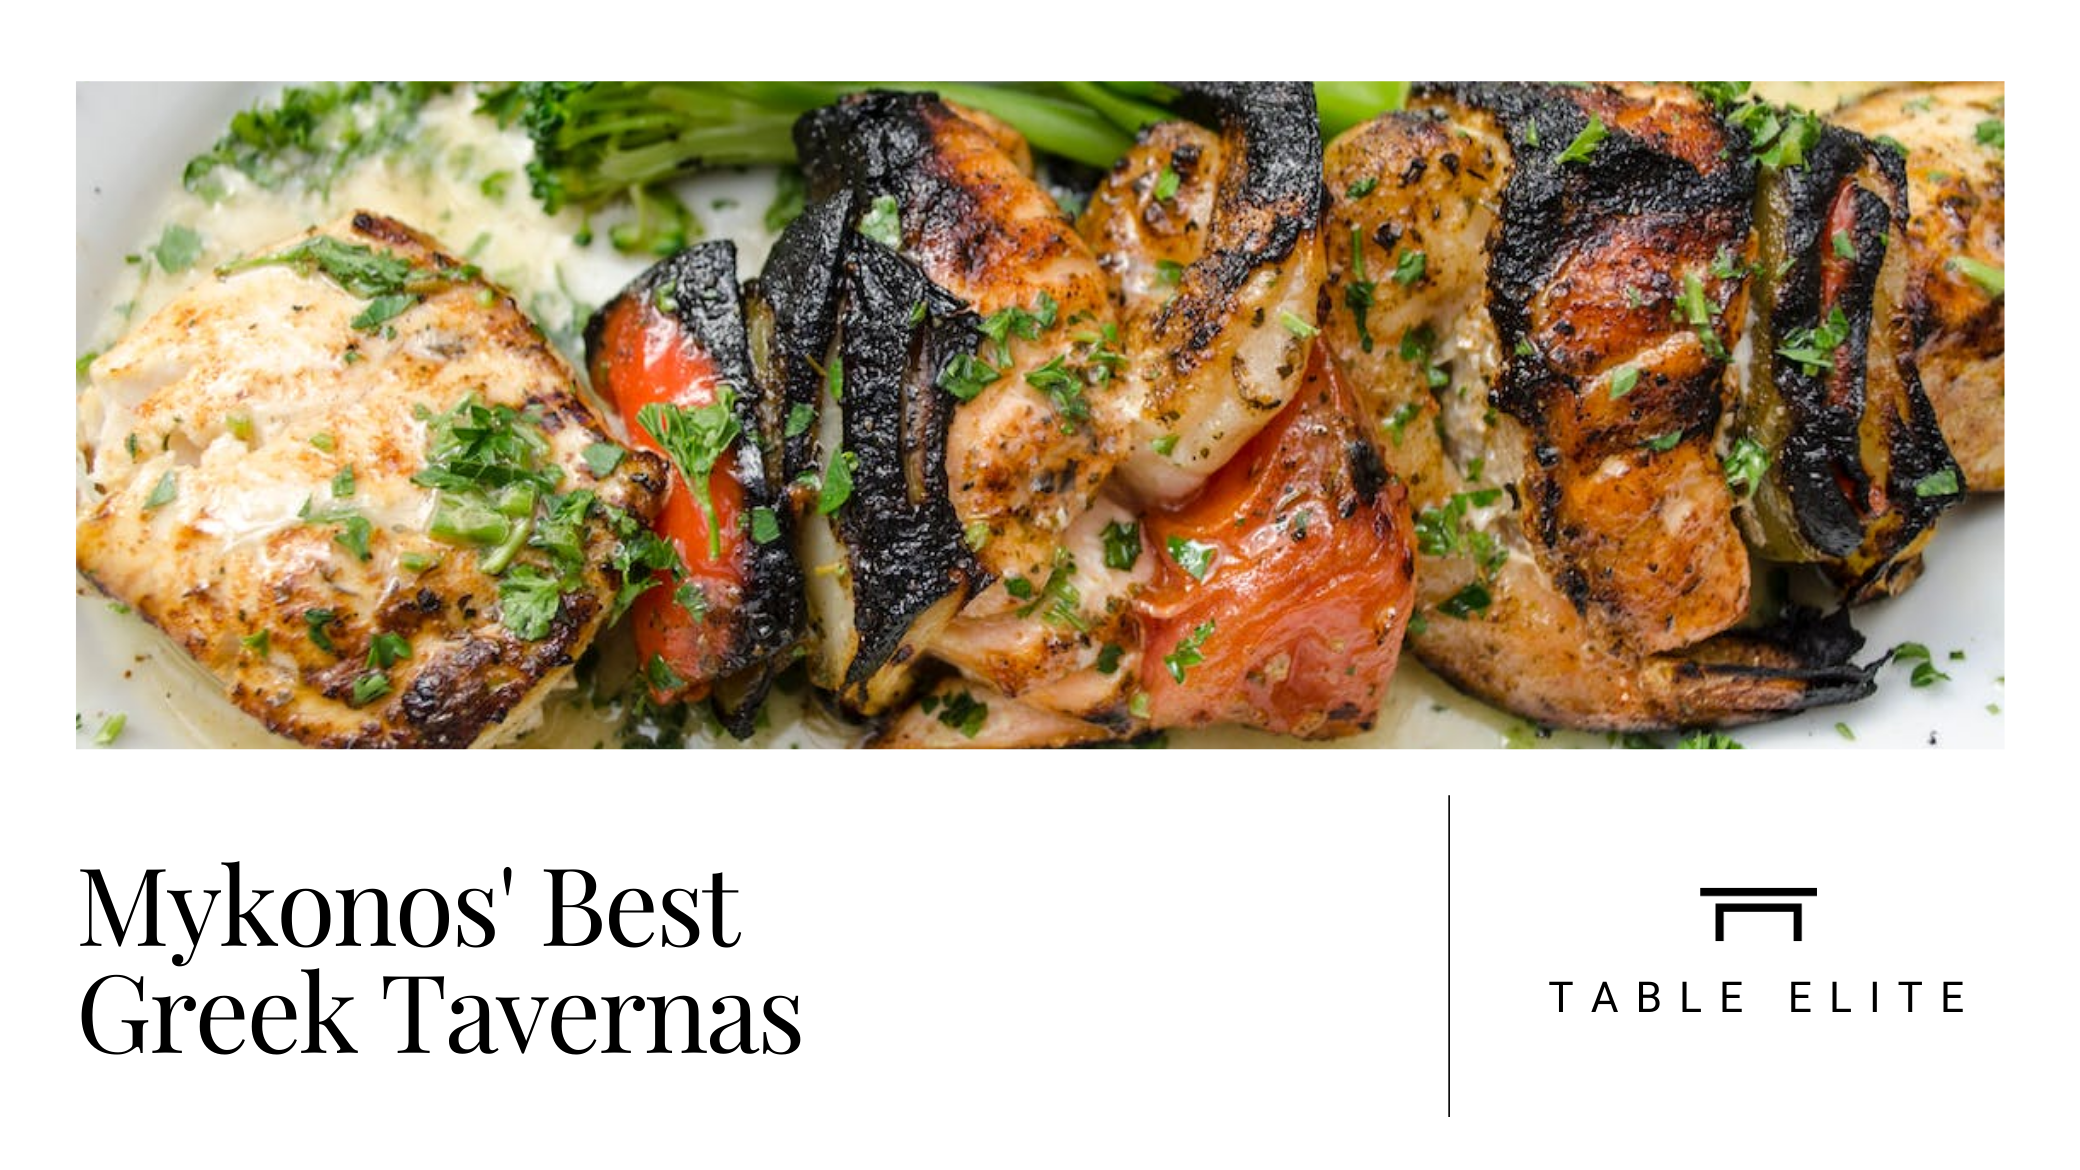 Mykonos' Best Greek Tavernas